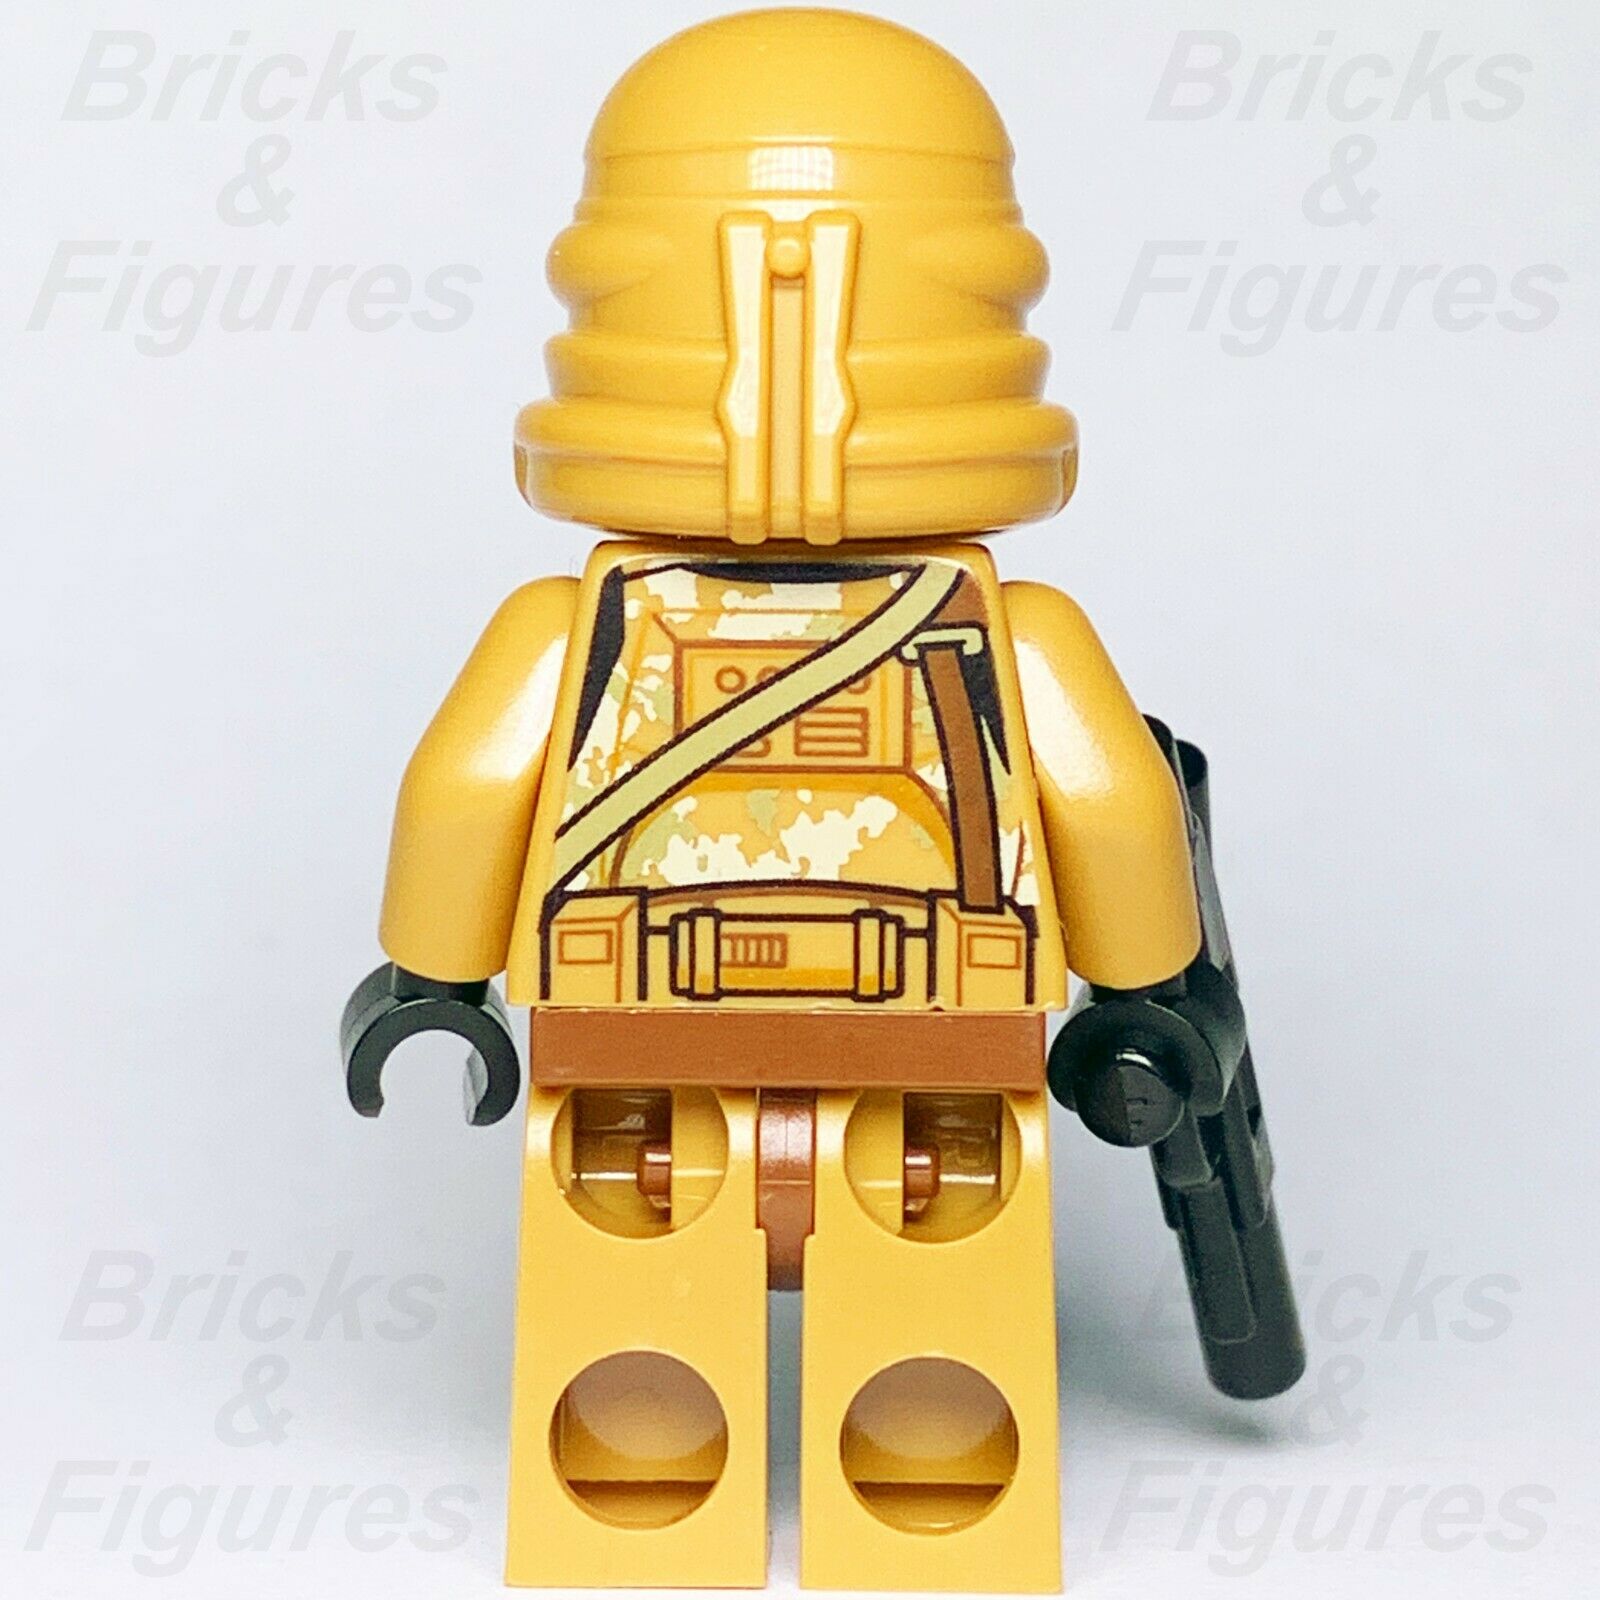 New Star Wars LEGO Geonosis Airborne Clone Trooper Minifigure 75089 - Bricks & Figures